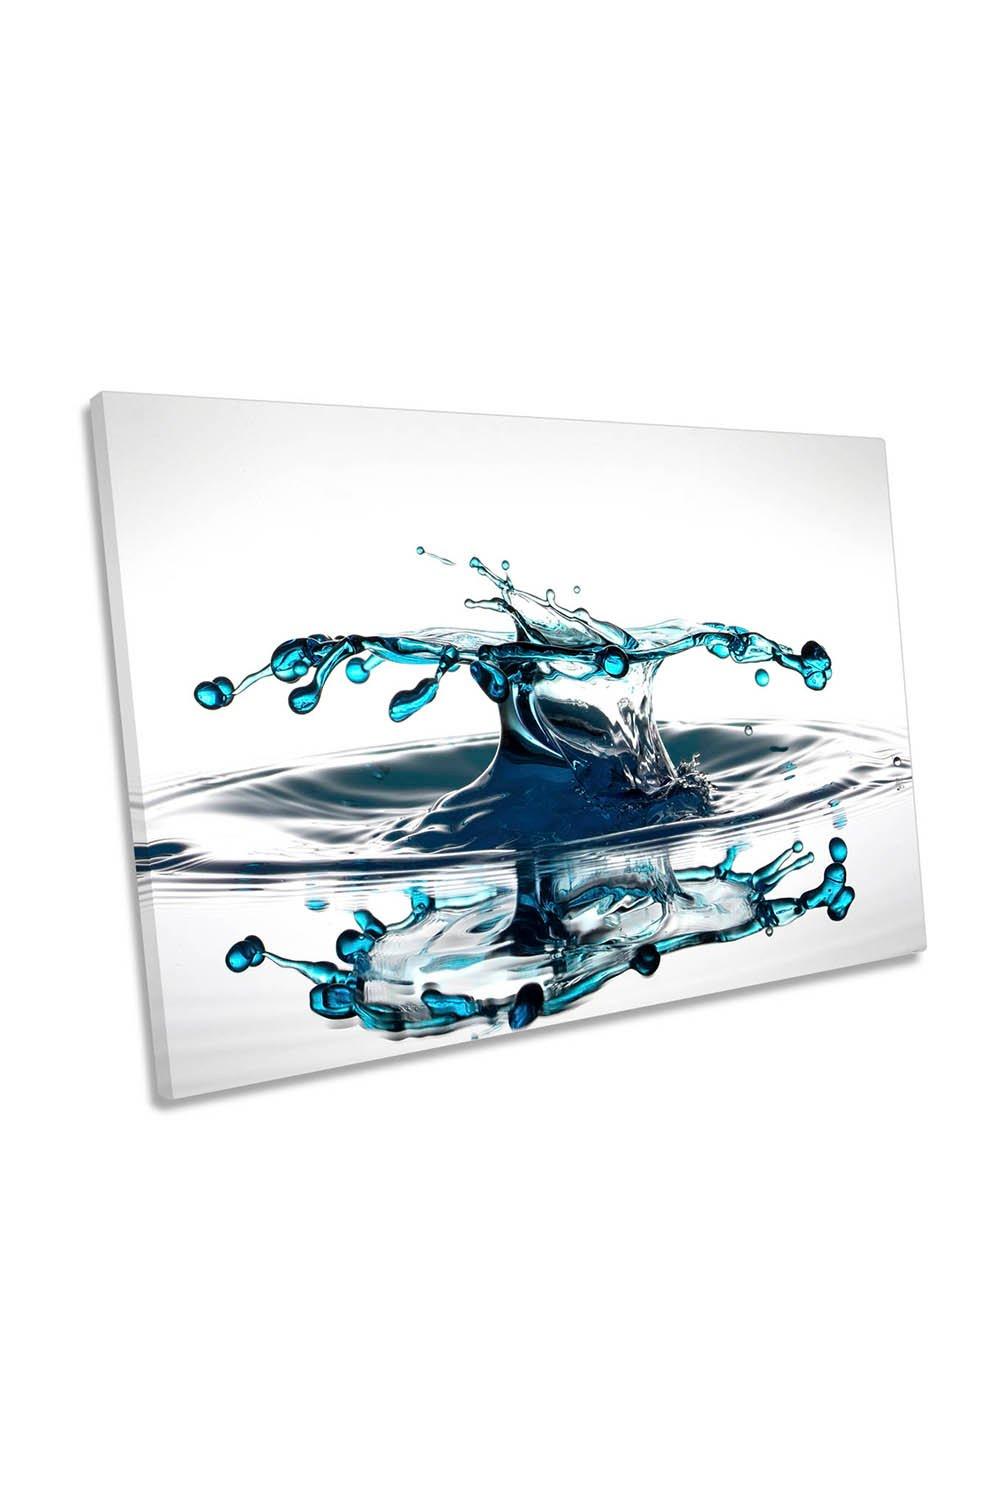 Water Splash Ripple Bathroom Canvas Wall Art Picture Print